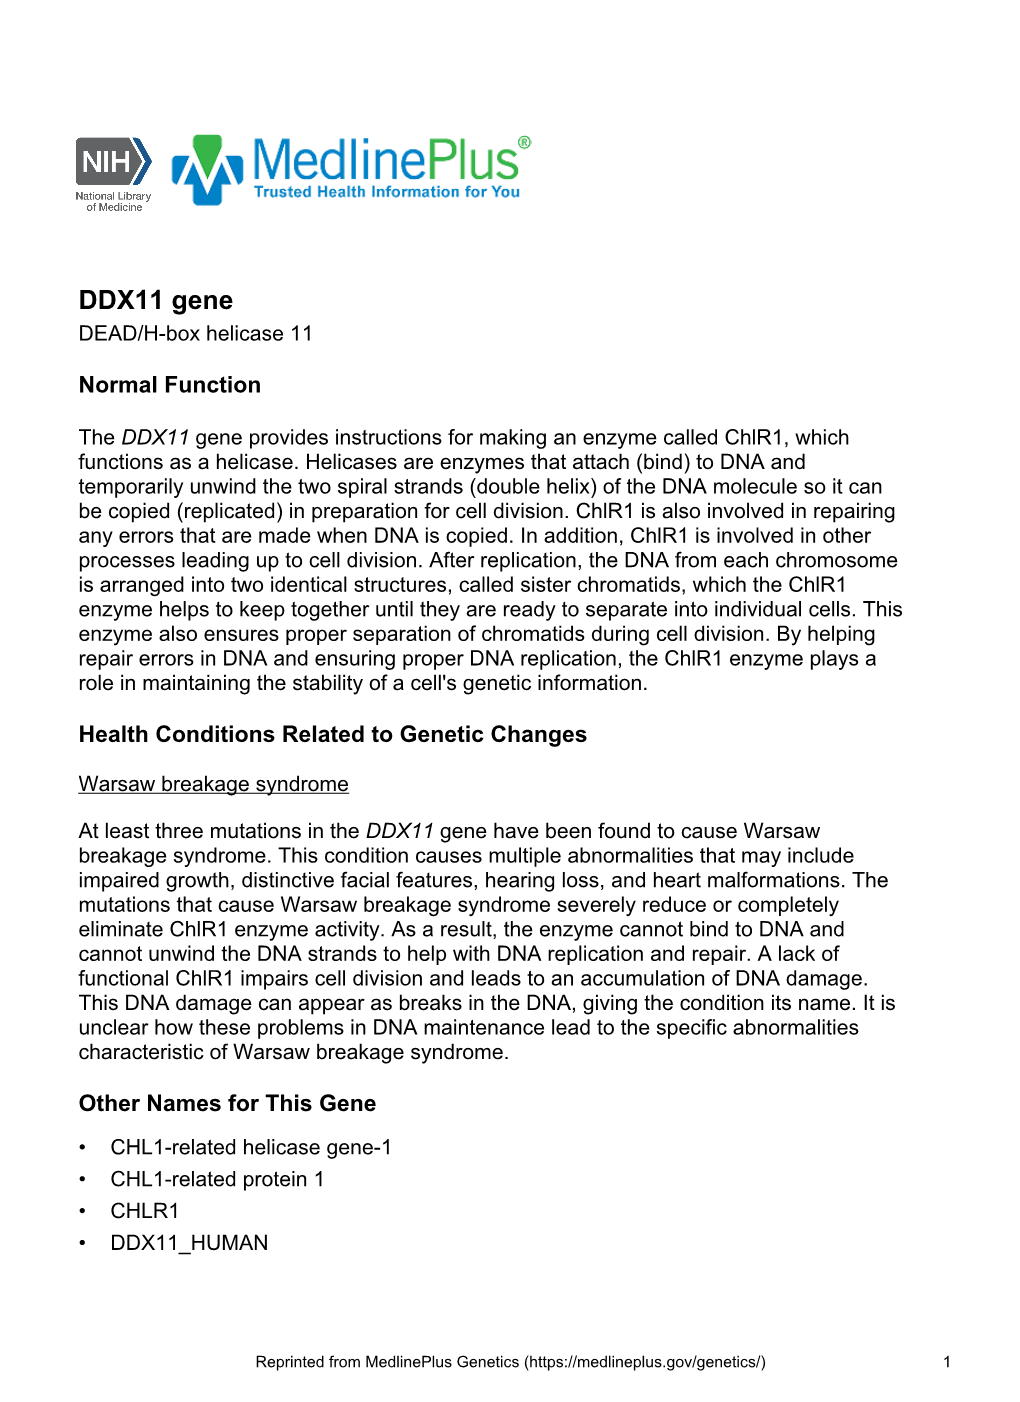 DDX11 Gene DEAD/H-Box Helicase 11